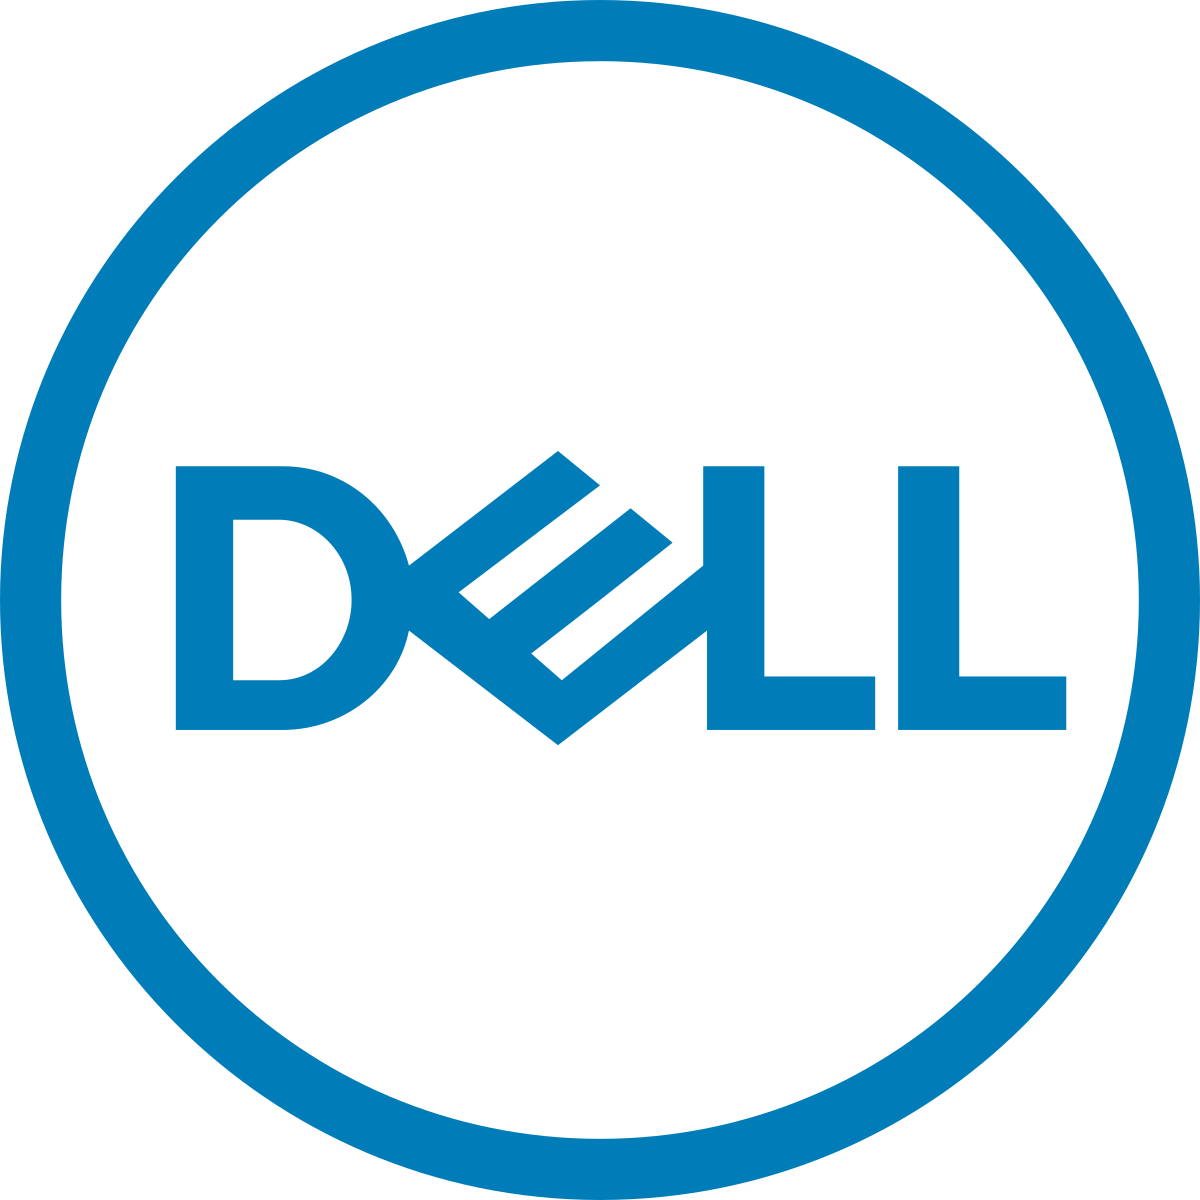 Dell Technologies Recruitment 2022